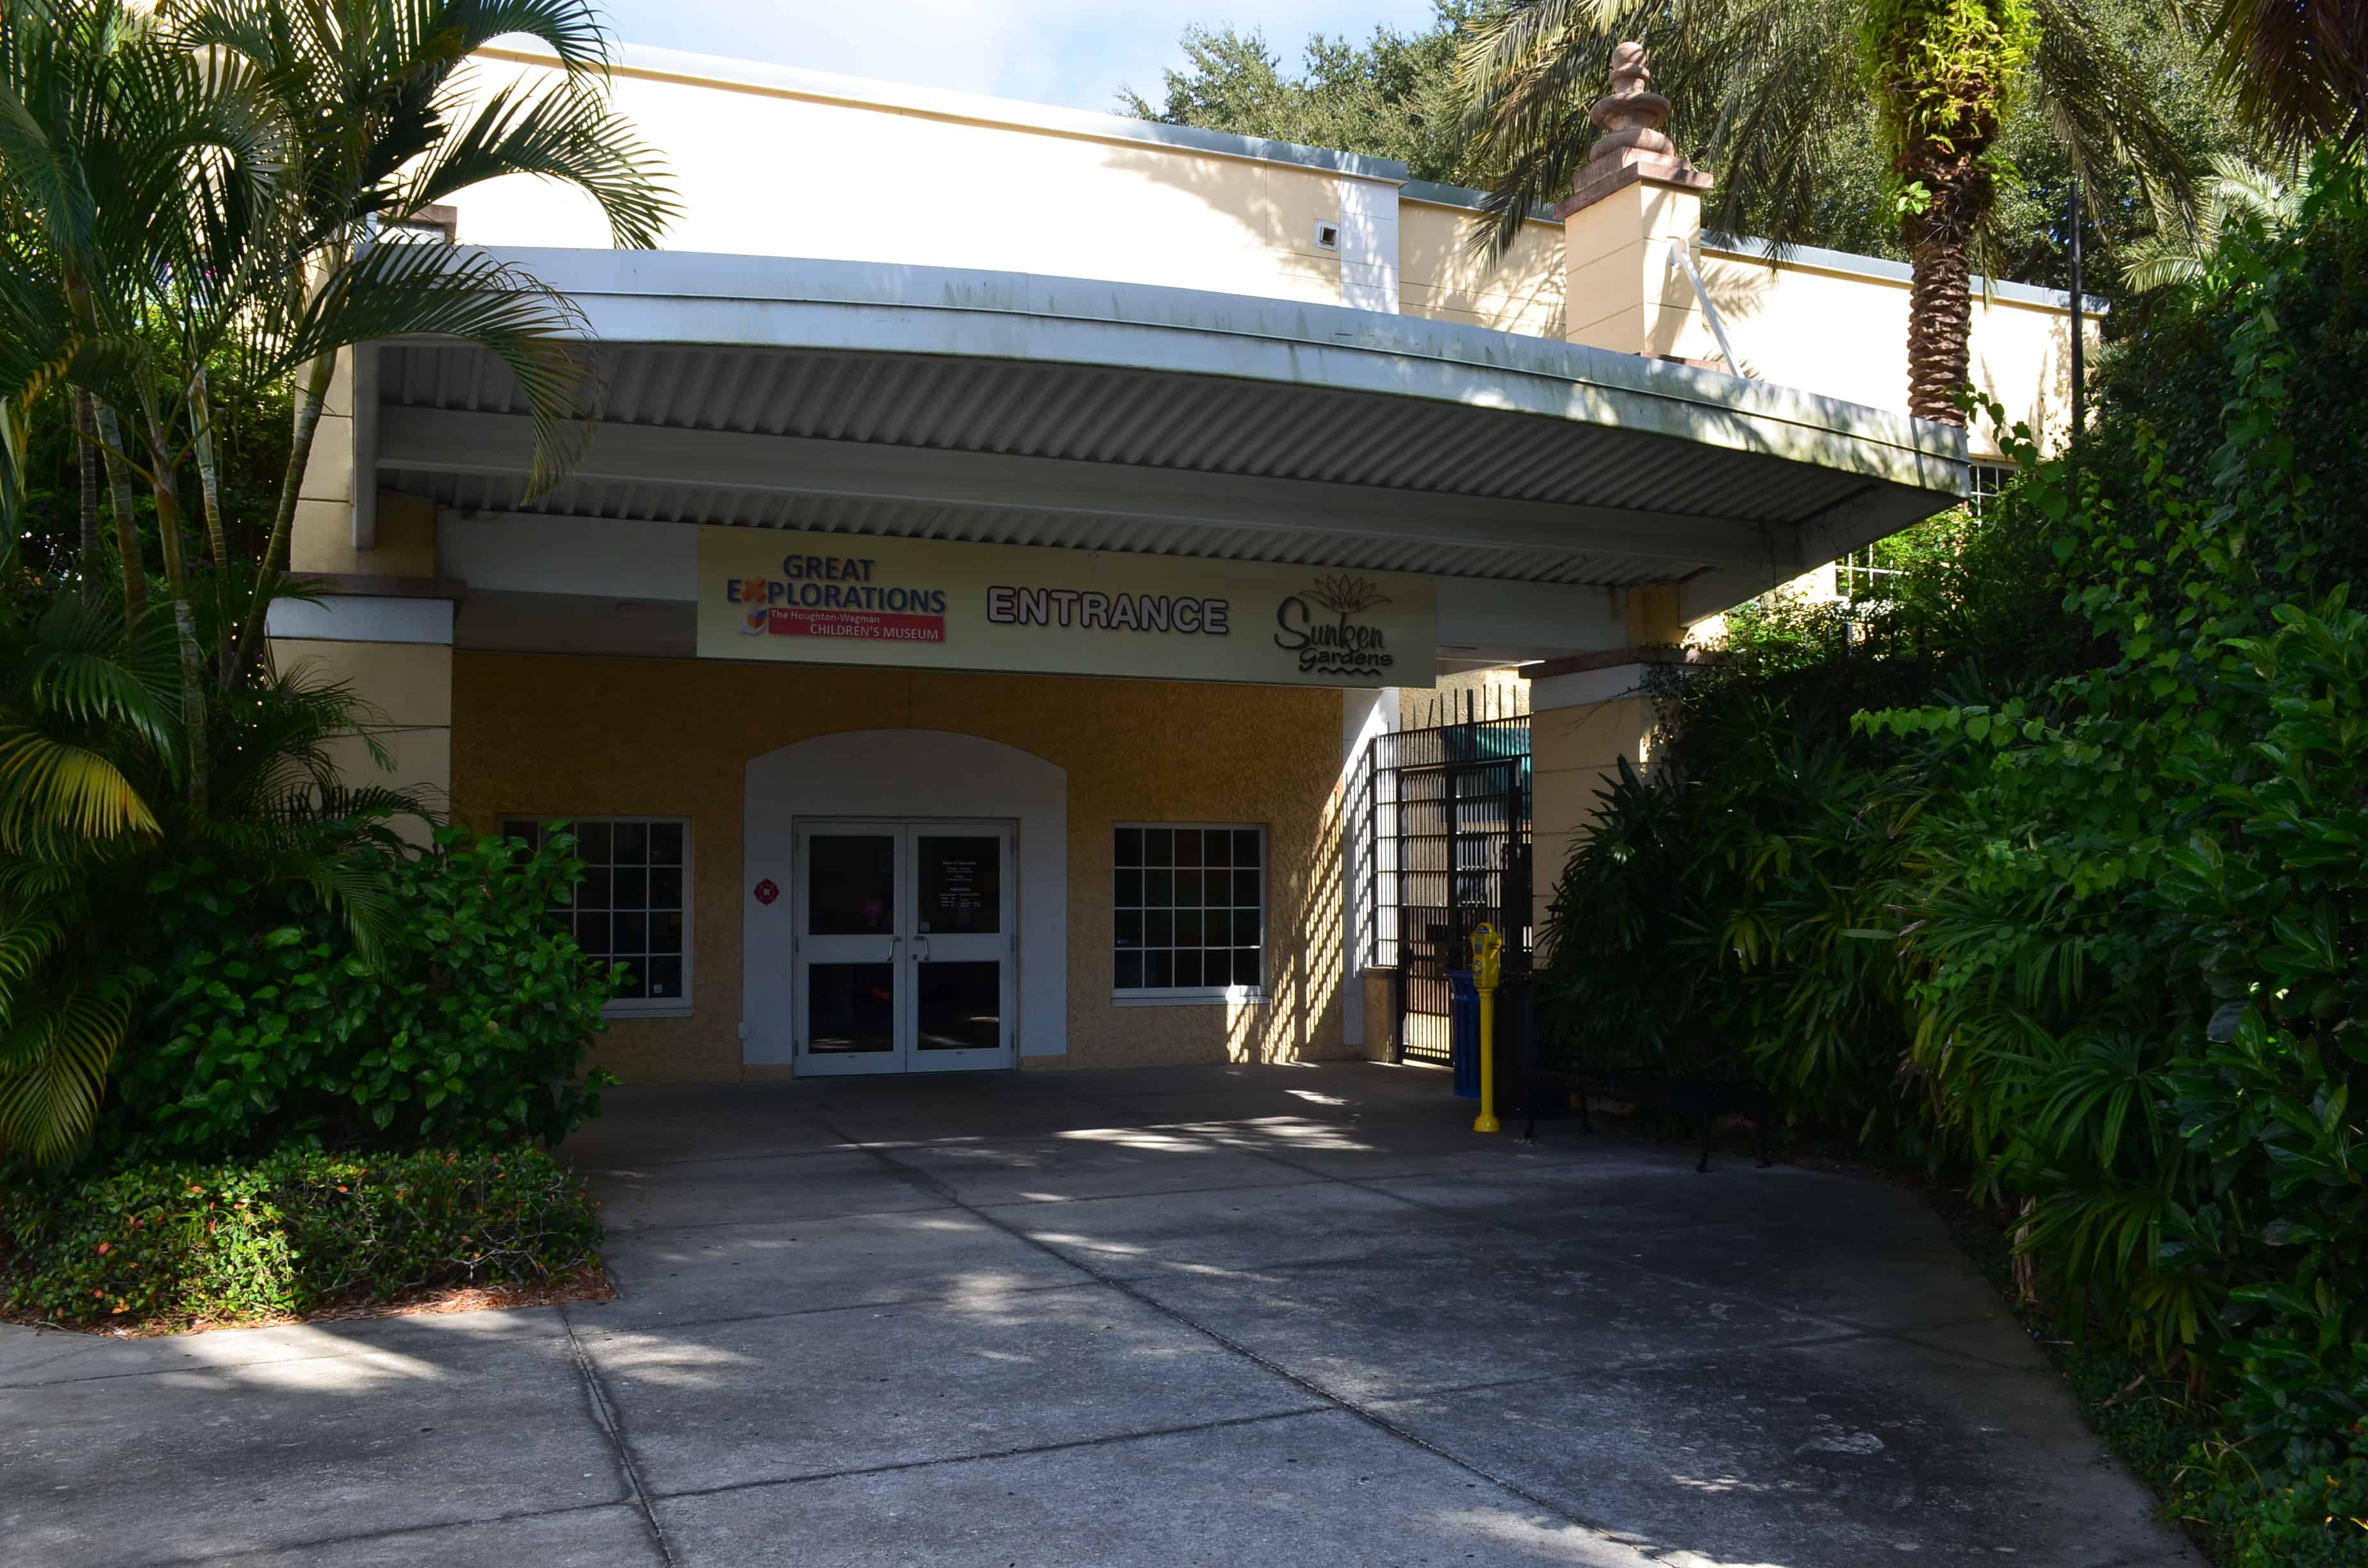 Entrance at the Sunken Gardens in St. Petersburg, Florida